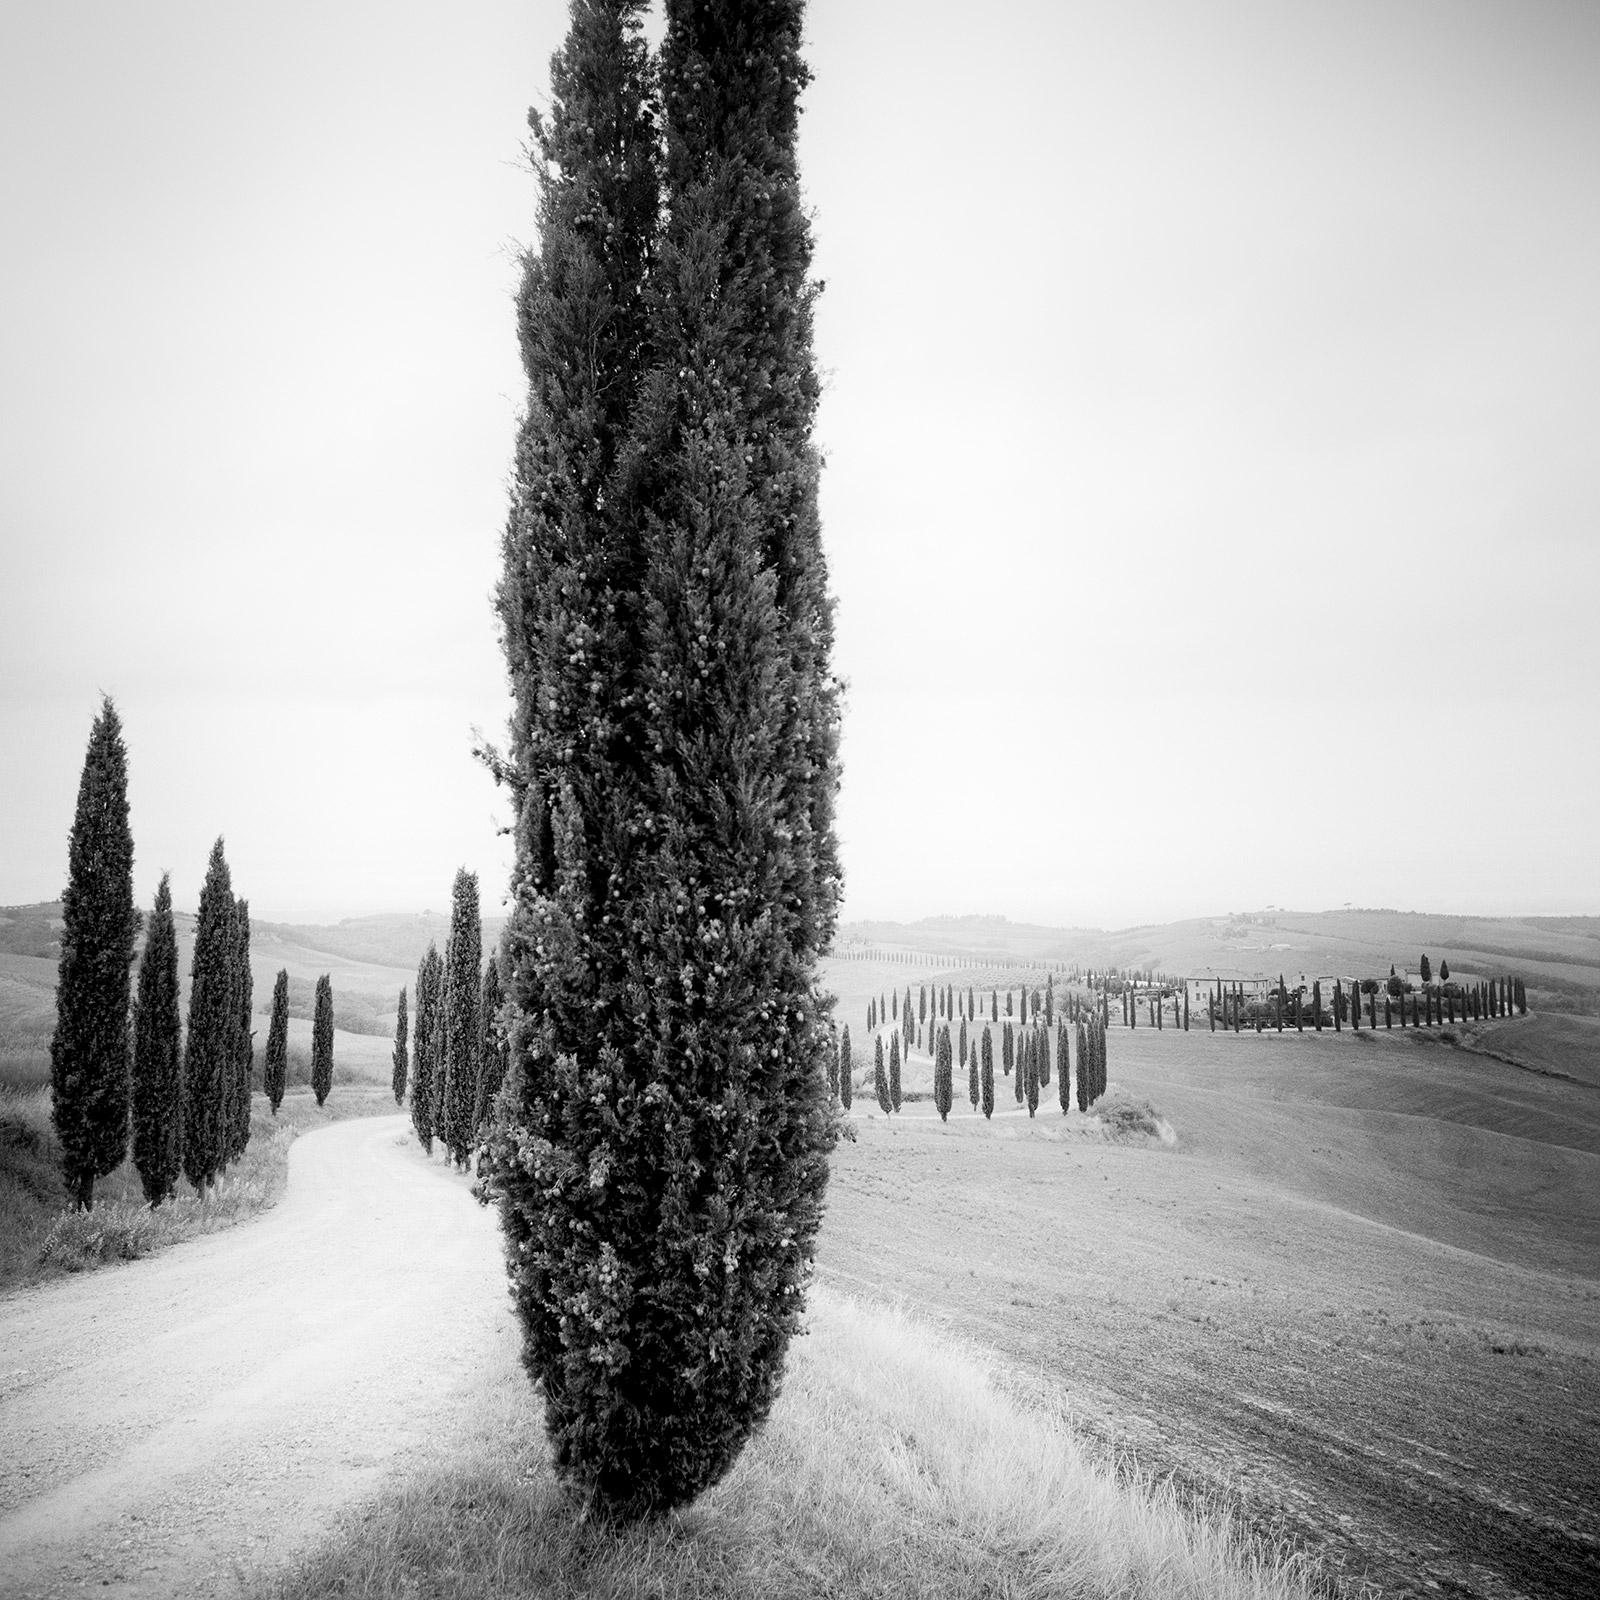 Cypress Trees, Tree Avenue, Tuscany, black and white art landscape photography